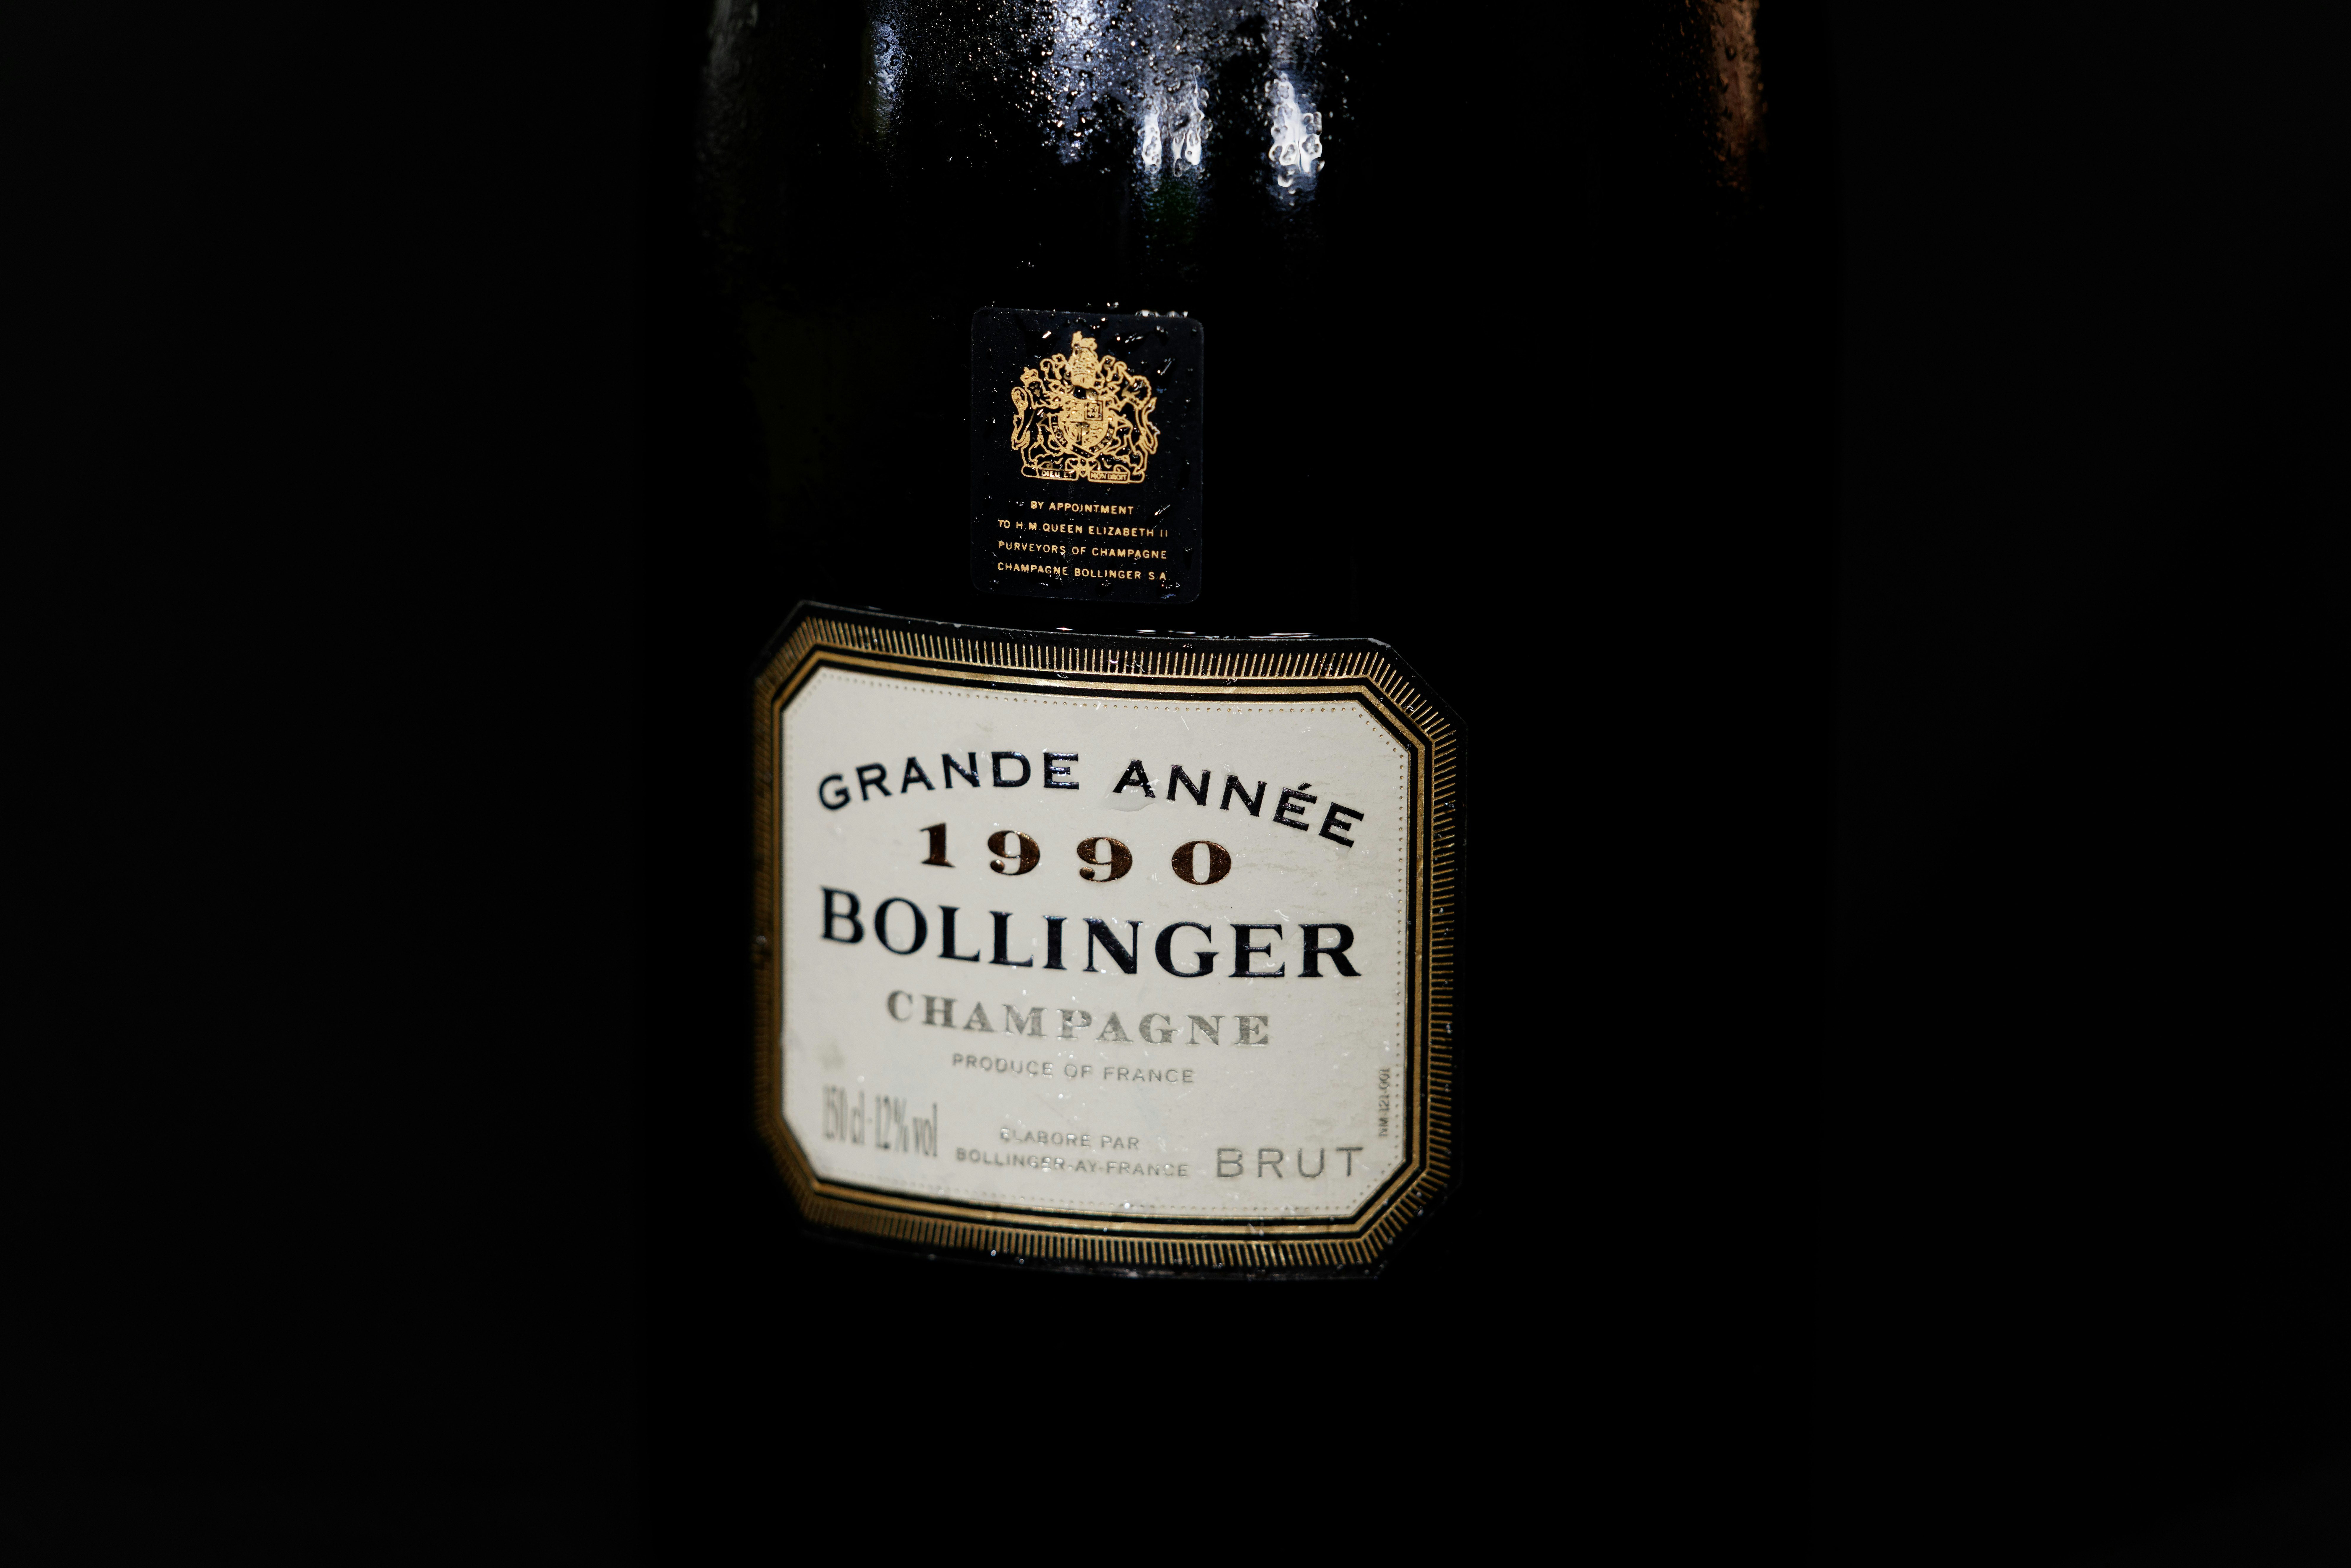 Grande Annee 1990 Bollinger champagne